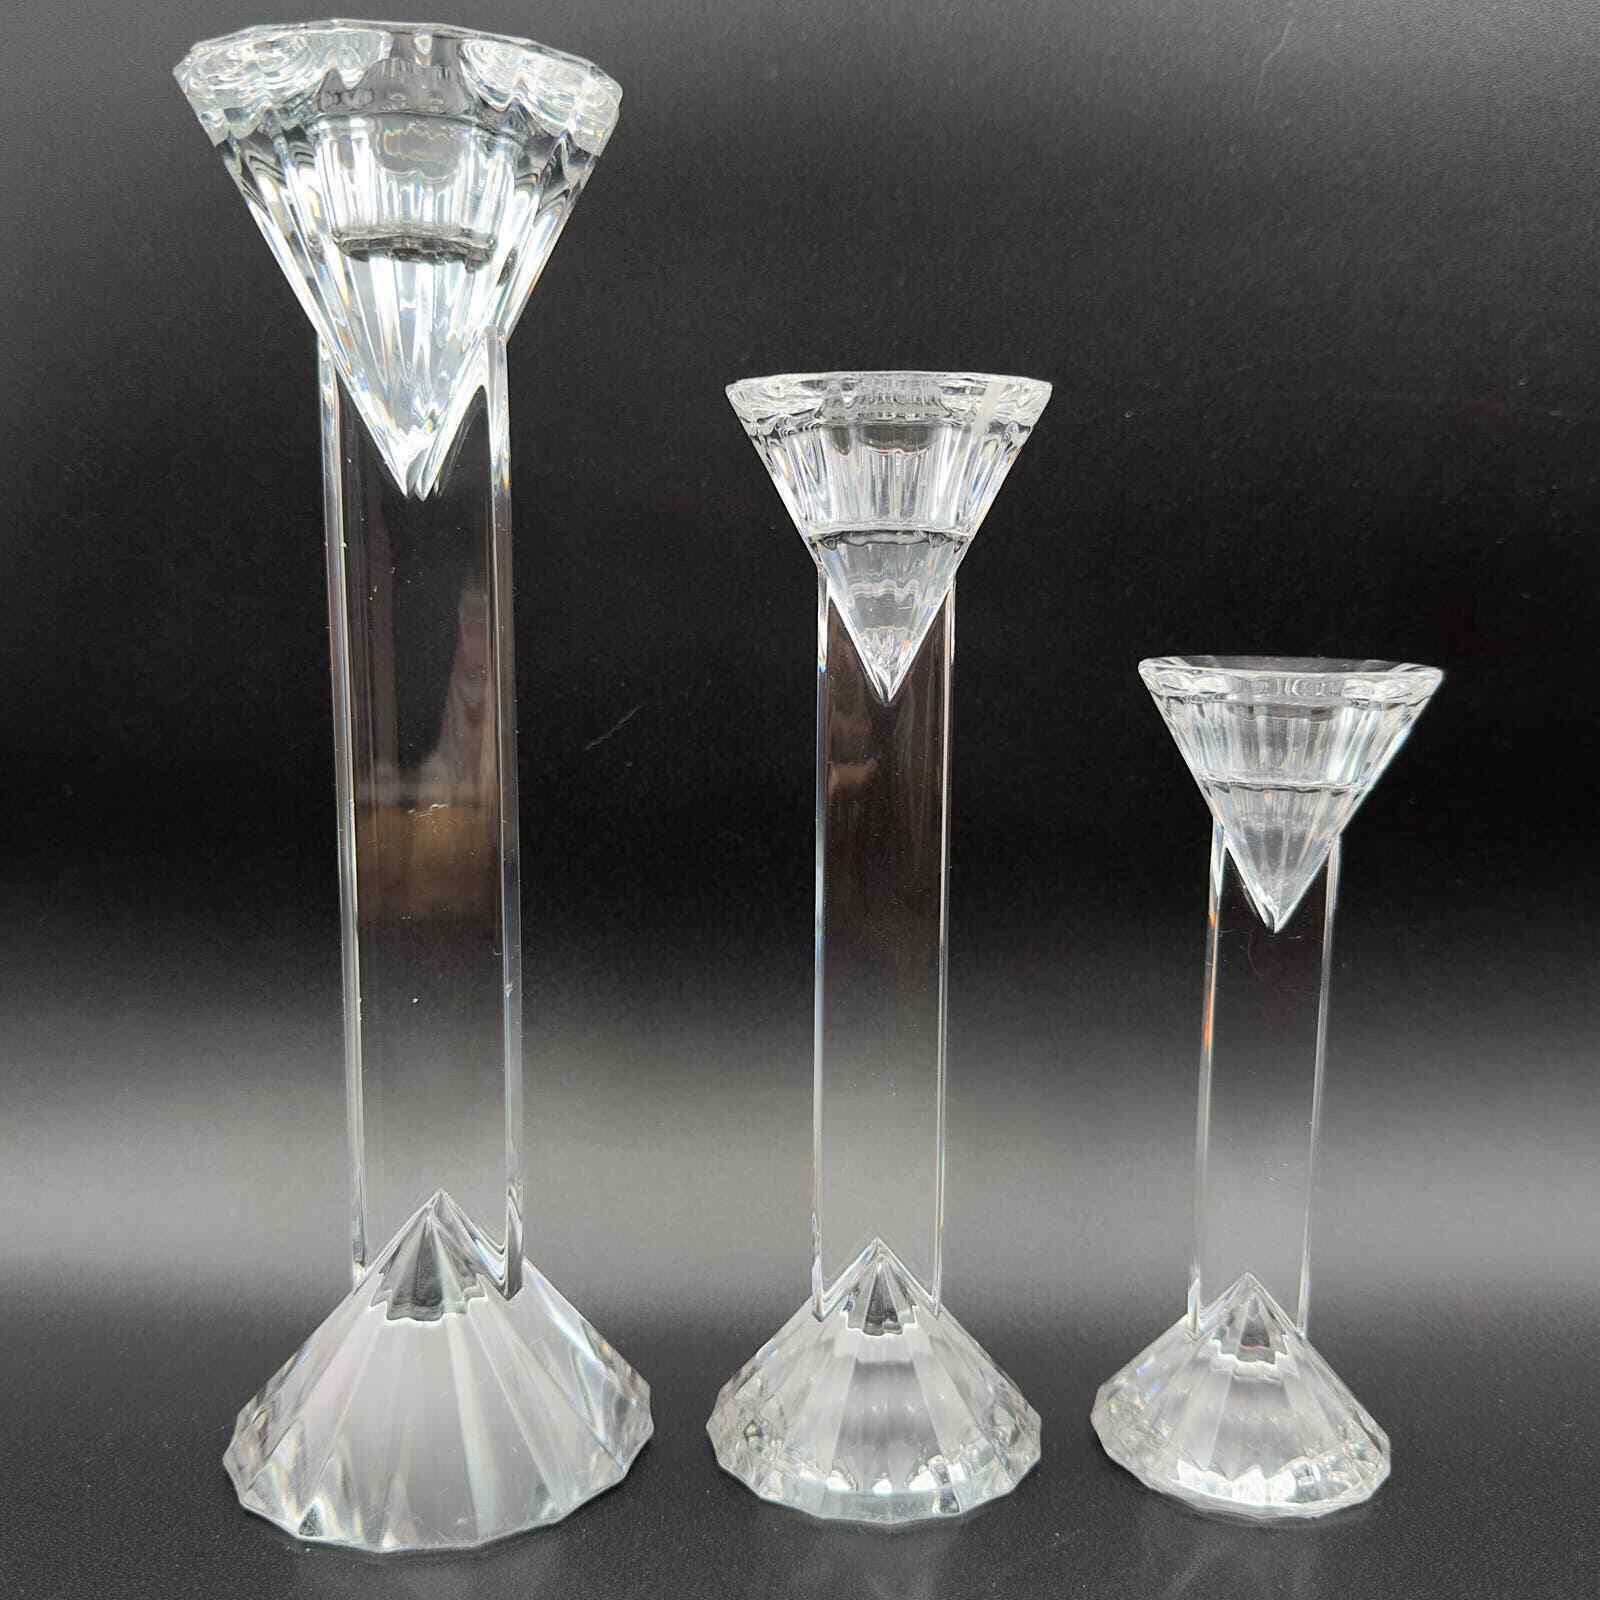 3 Jihlavske Sklarny Art Deco Style Crystal Candlesticks Czech Bohemia 24% Lead